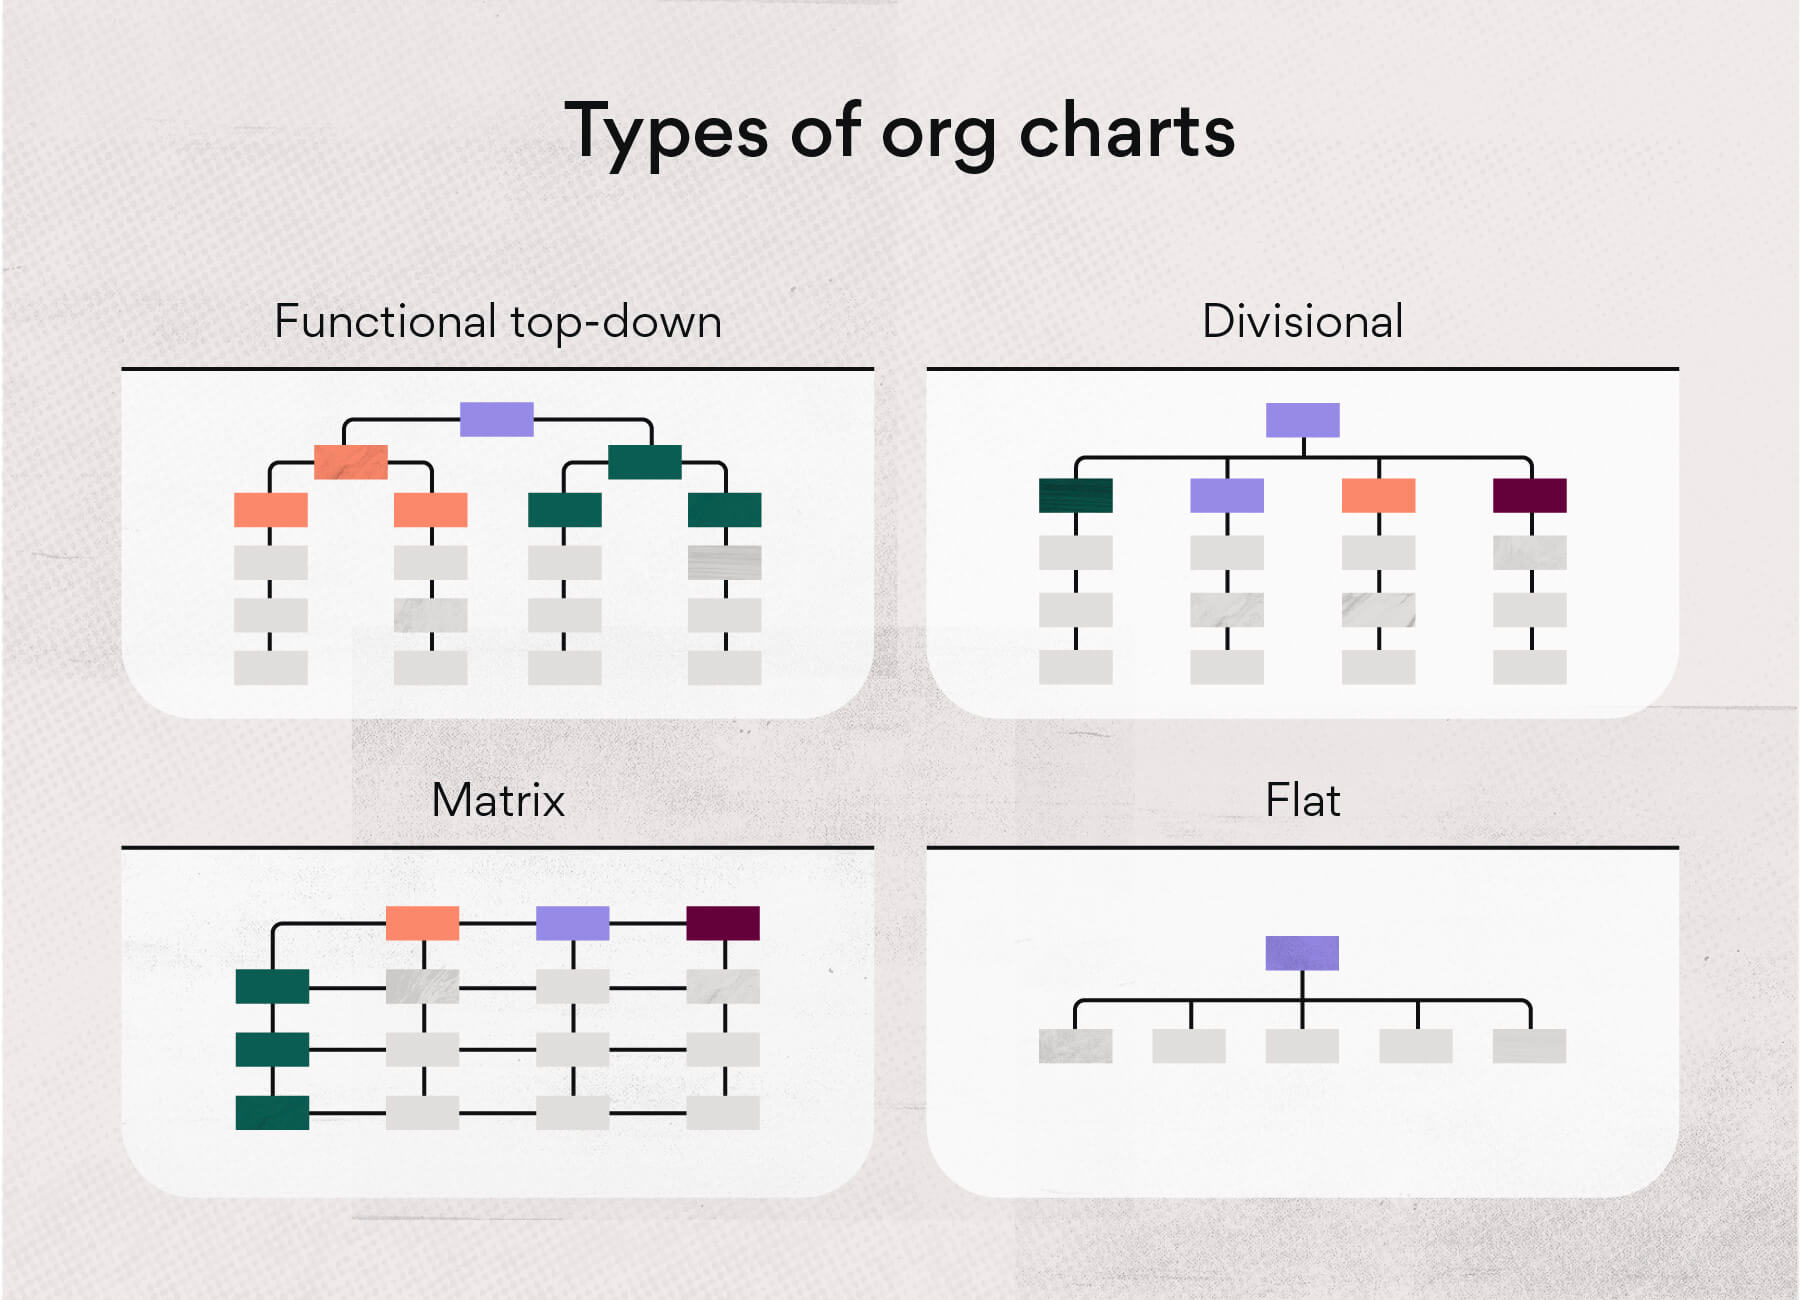 Types of organizational charts